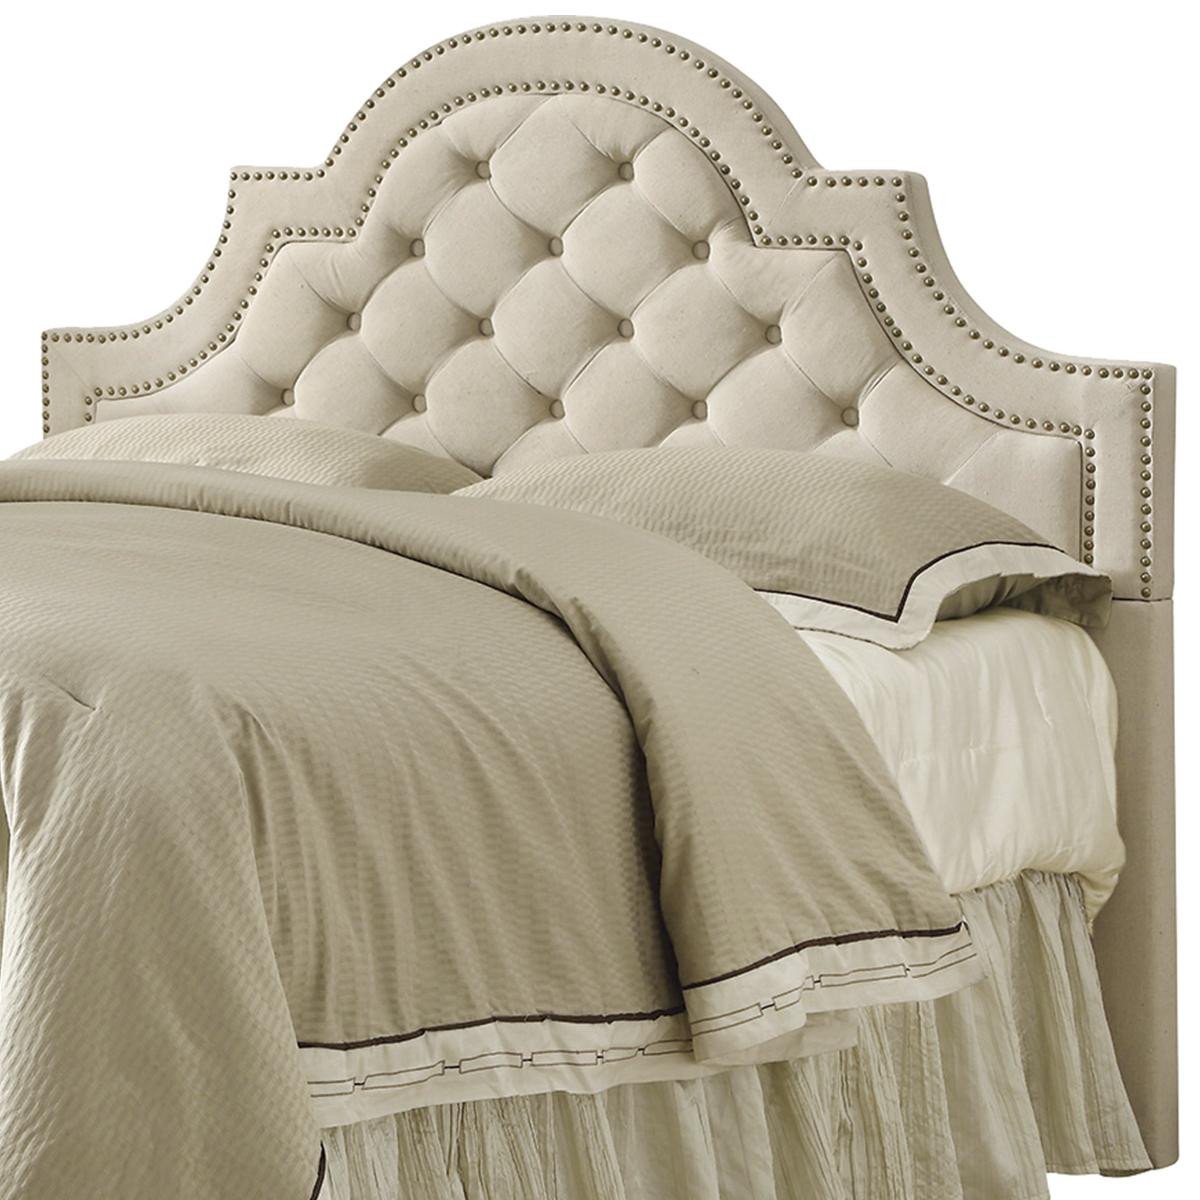 Nebraska Furniture Bedroom Set New at Home Ojai Full Queen Headboard In Beige